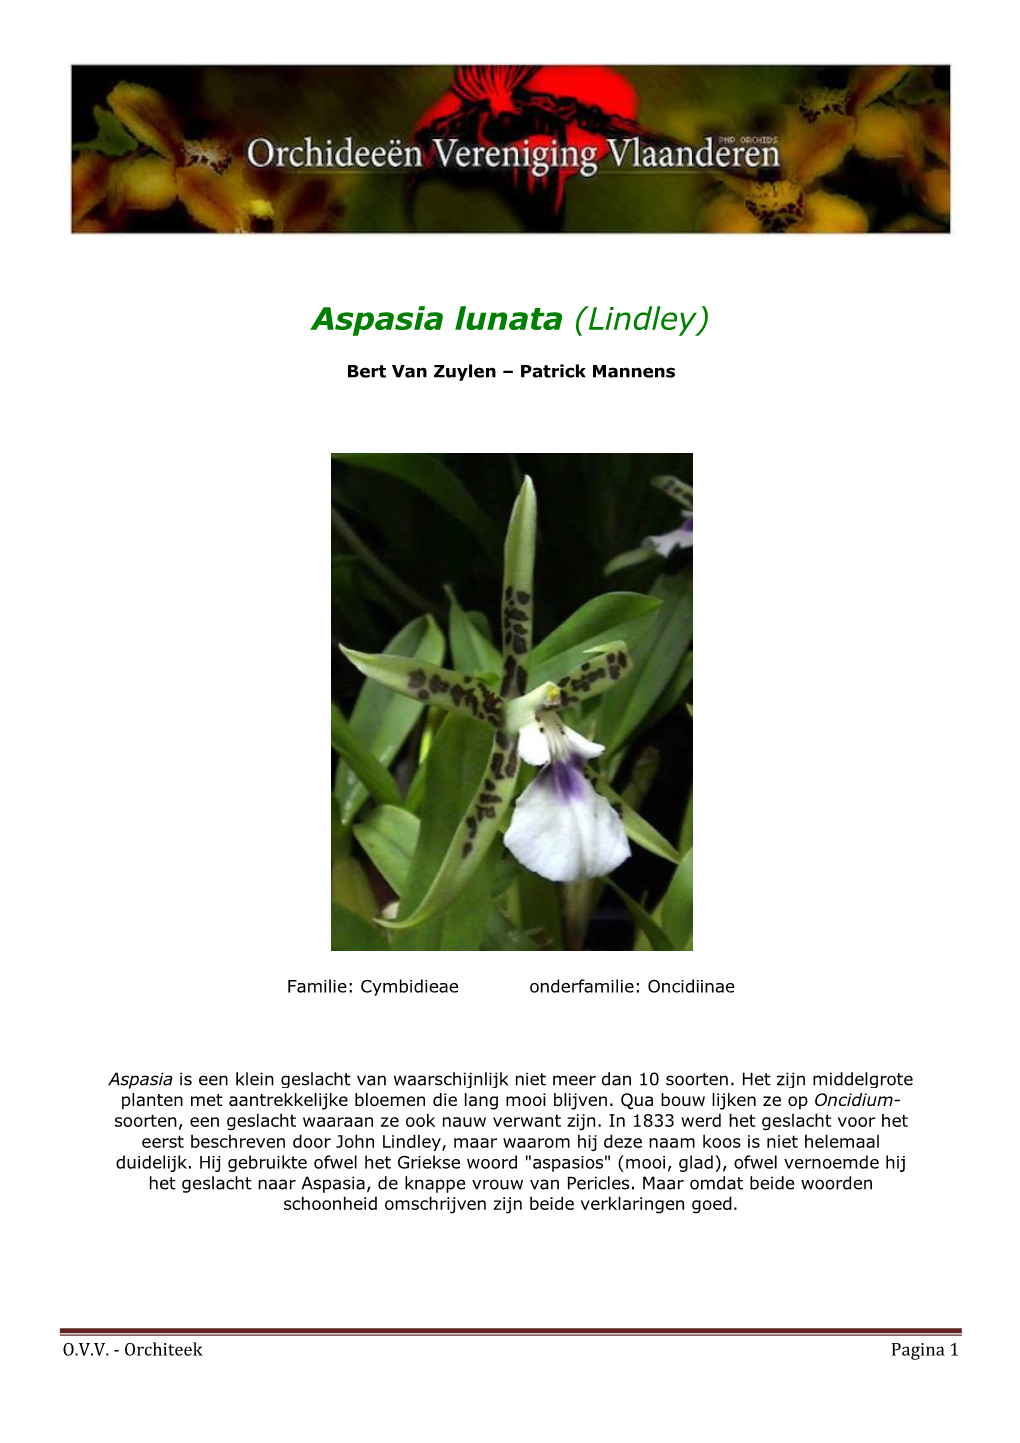 Aspasia Lunata (Lindley)